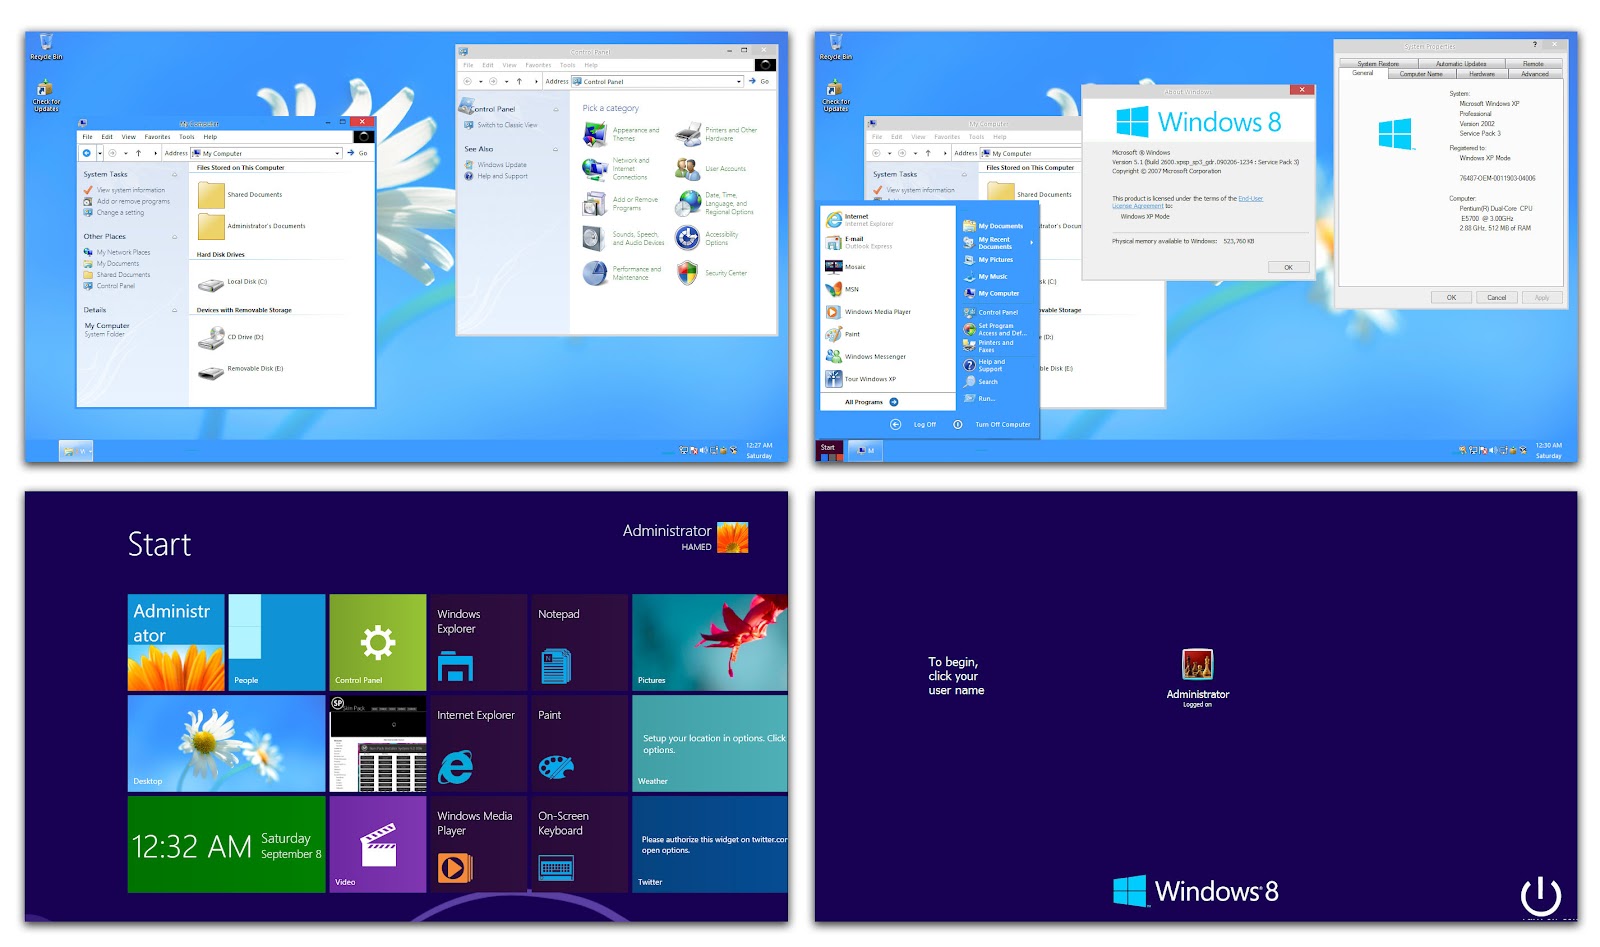 Windows 8 Skin Pack. Windows Vista Skin Pack. Skin Pack Windows XP. Windows 8 Skin Pack for XP. Windows transformer